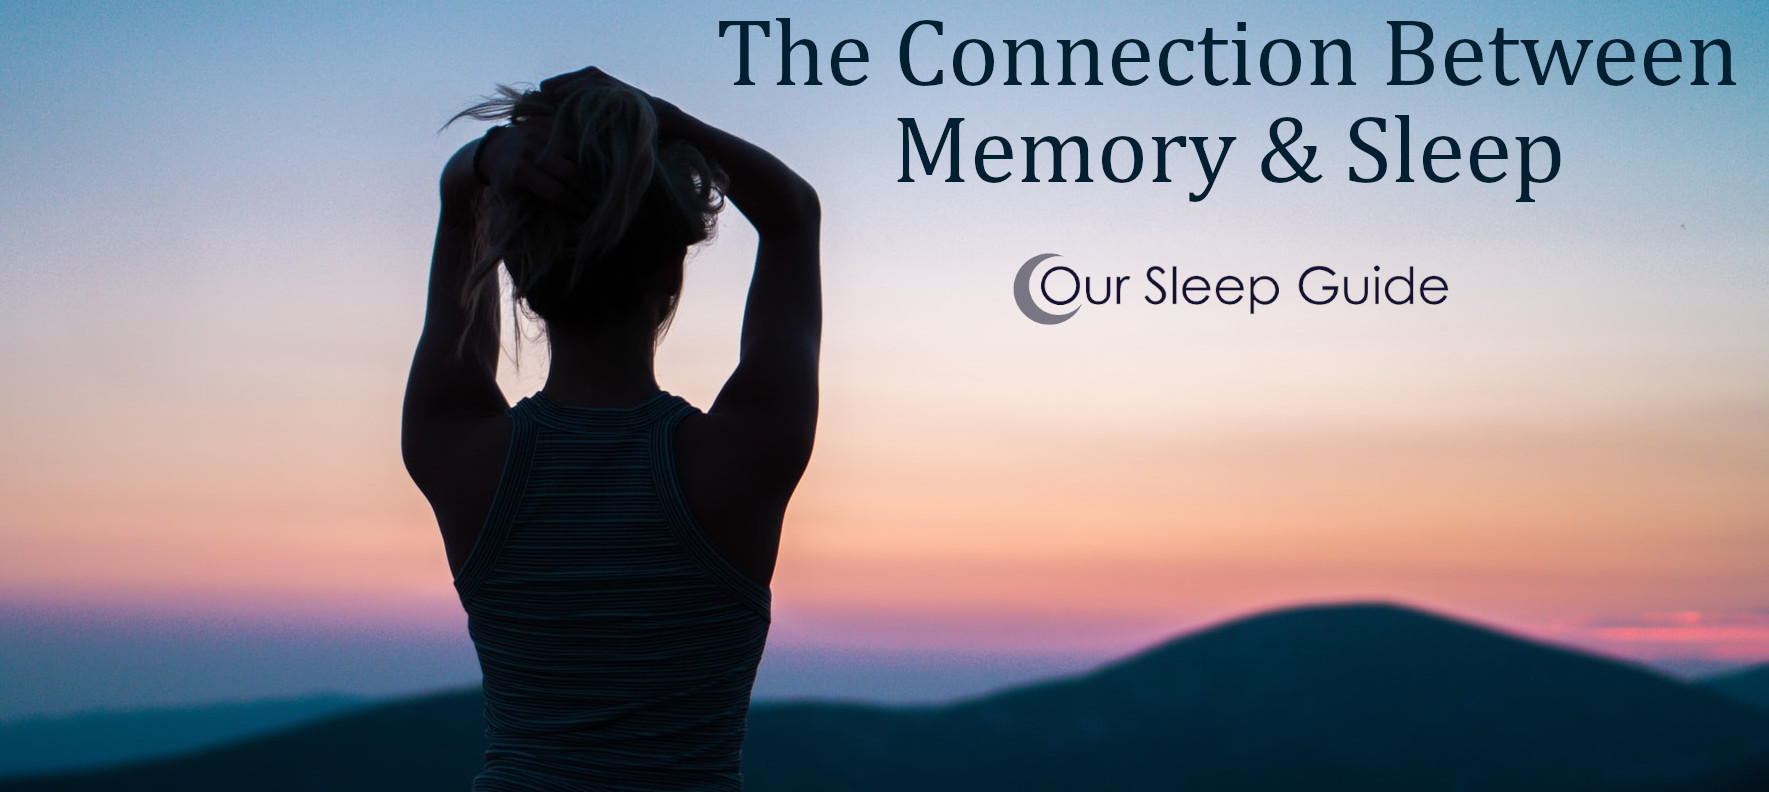 the tie between memory and sleep